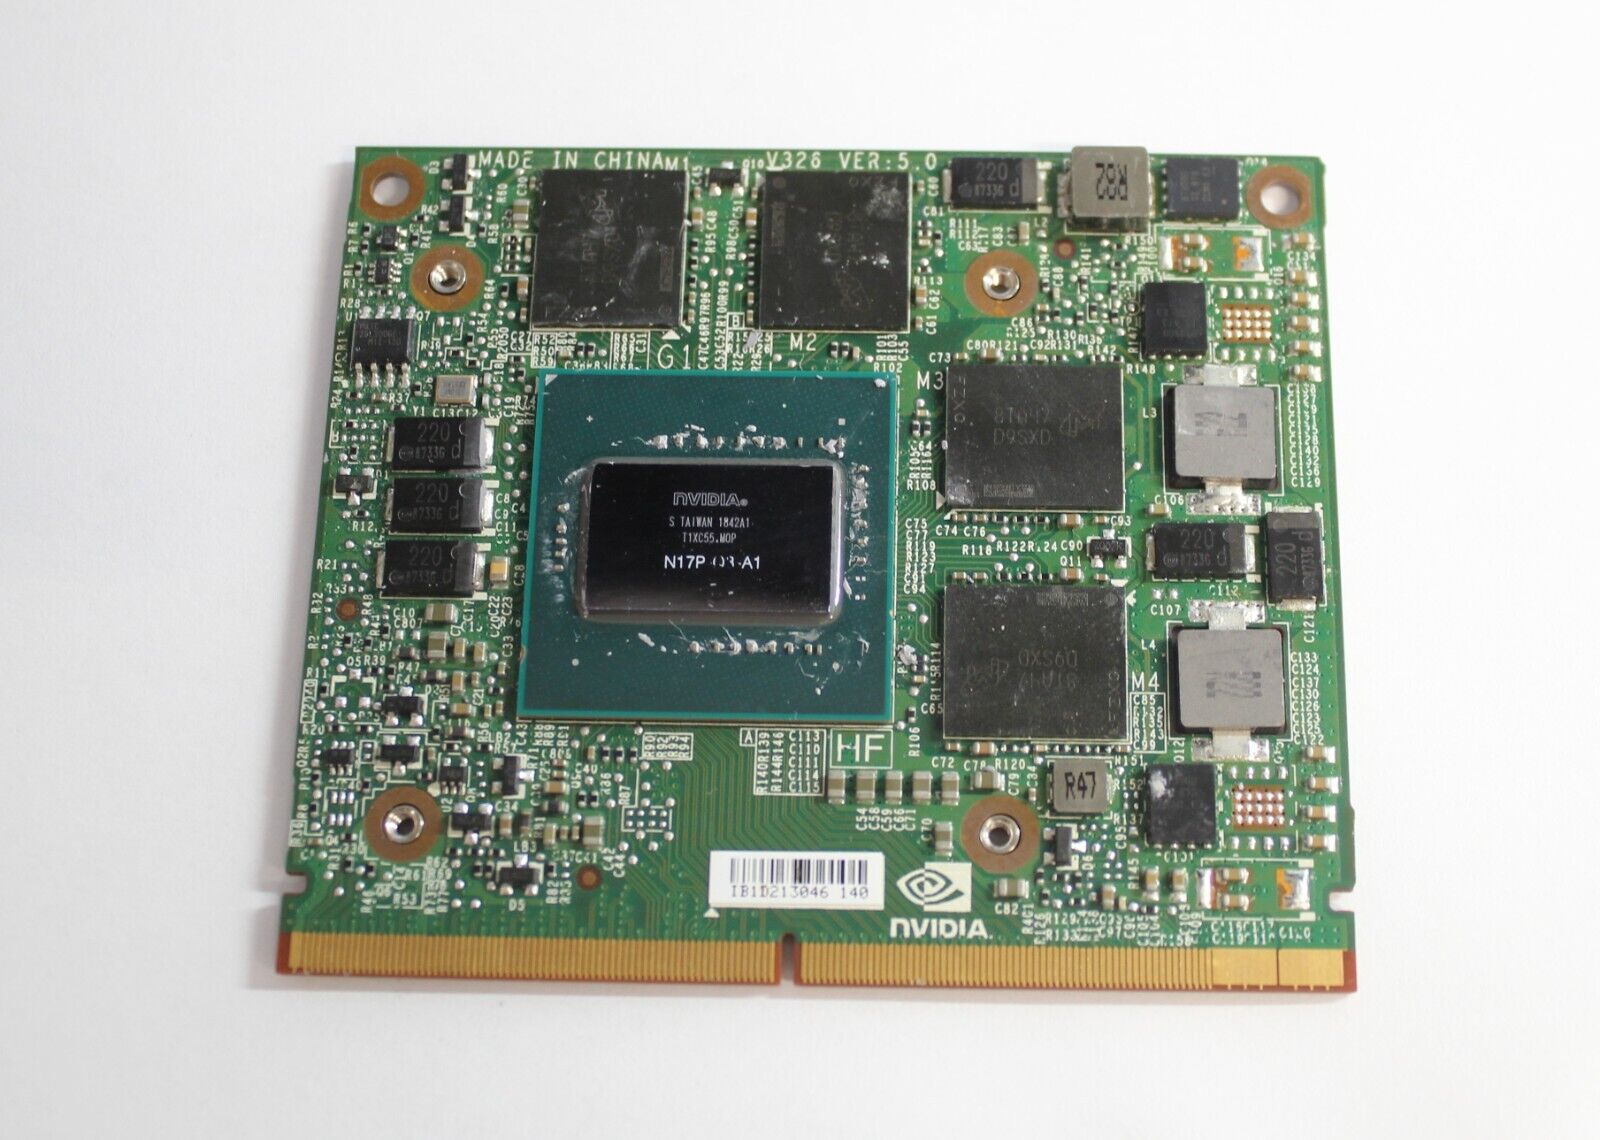 Nvidia Quadro M2200M 4 GB GDDR5 MXM 3.0A Laptop Video Card DP/N: 7024K tested